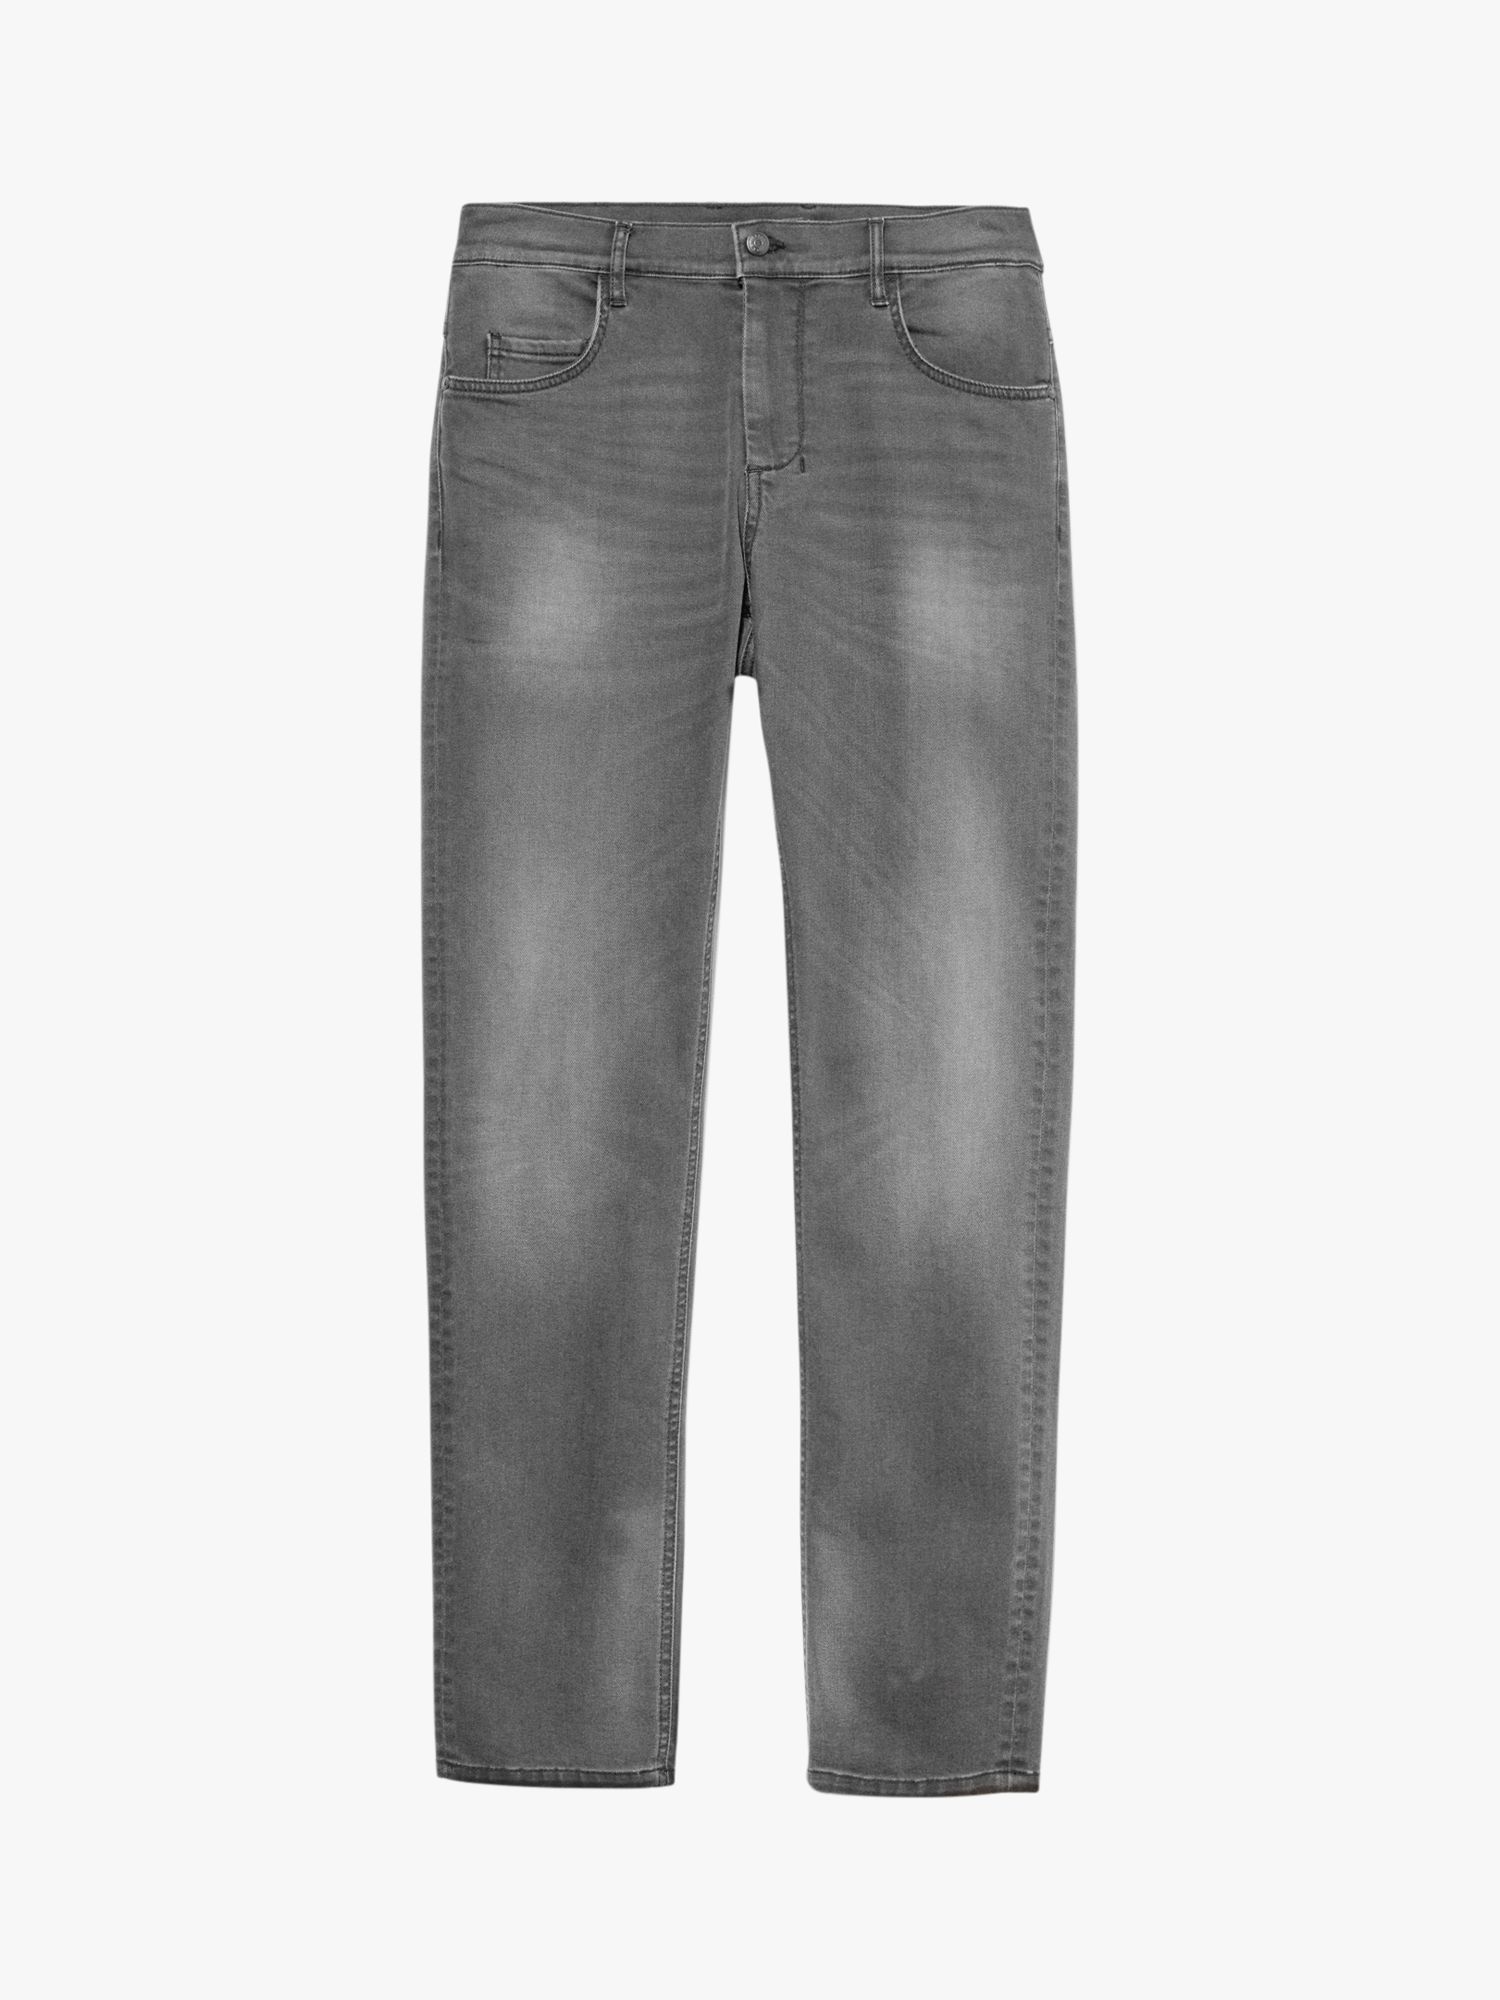 SISLEY Helsinki Skinny Fit Jeans, Grey, 30R